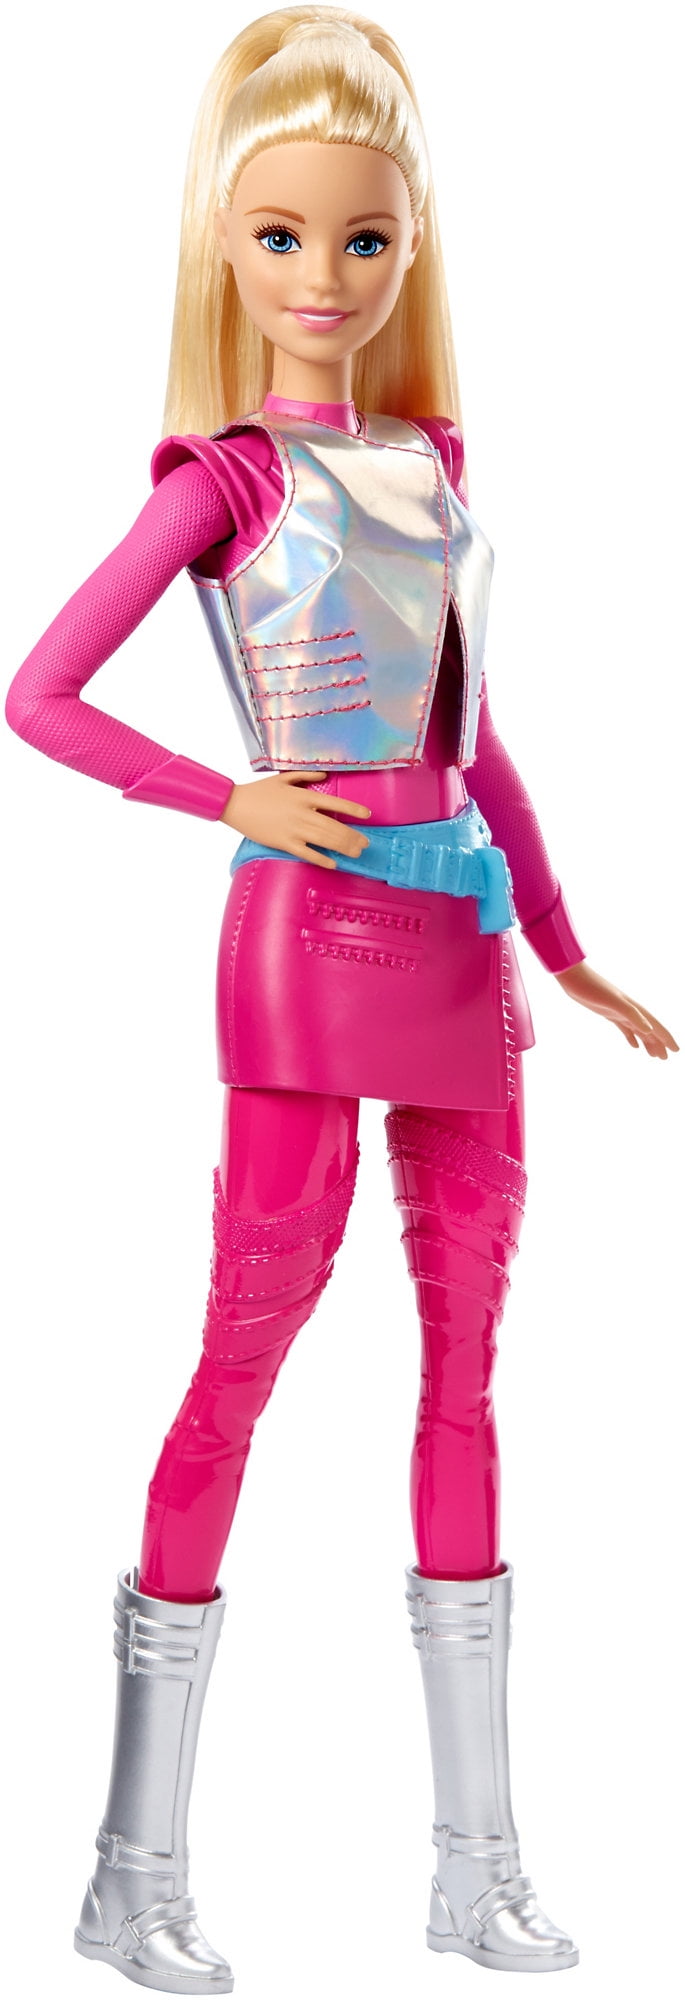 Preach comedy finger Barbie Star Light Adventure Galaxy Barbie Doll - Walmart.com